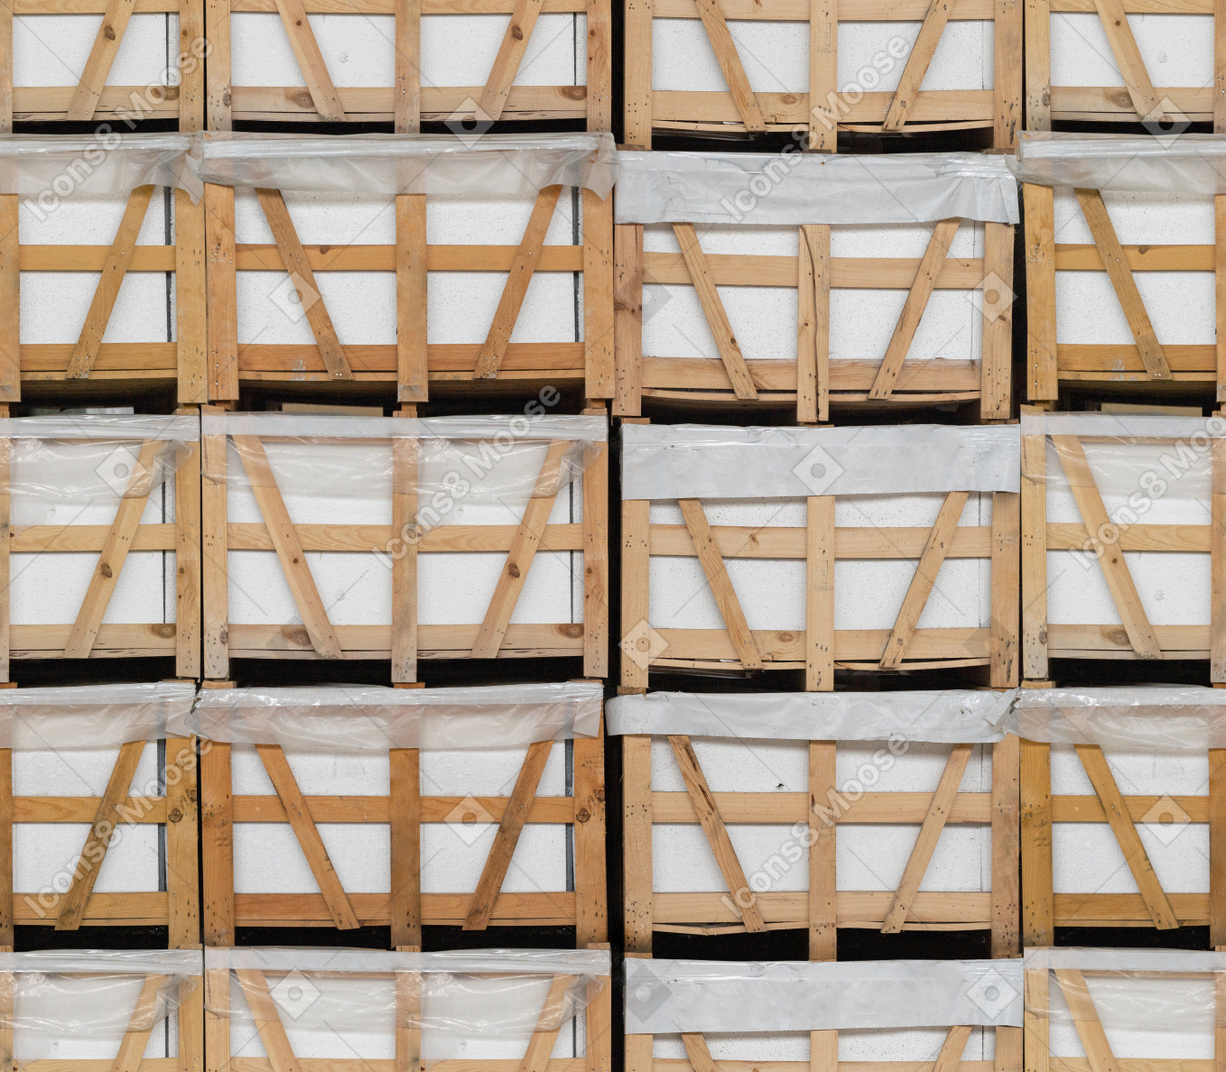 Mattoni bianchi conservati in bidoni di legno